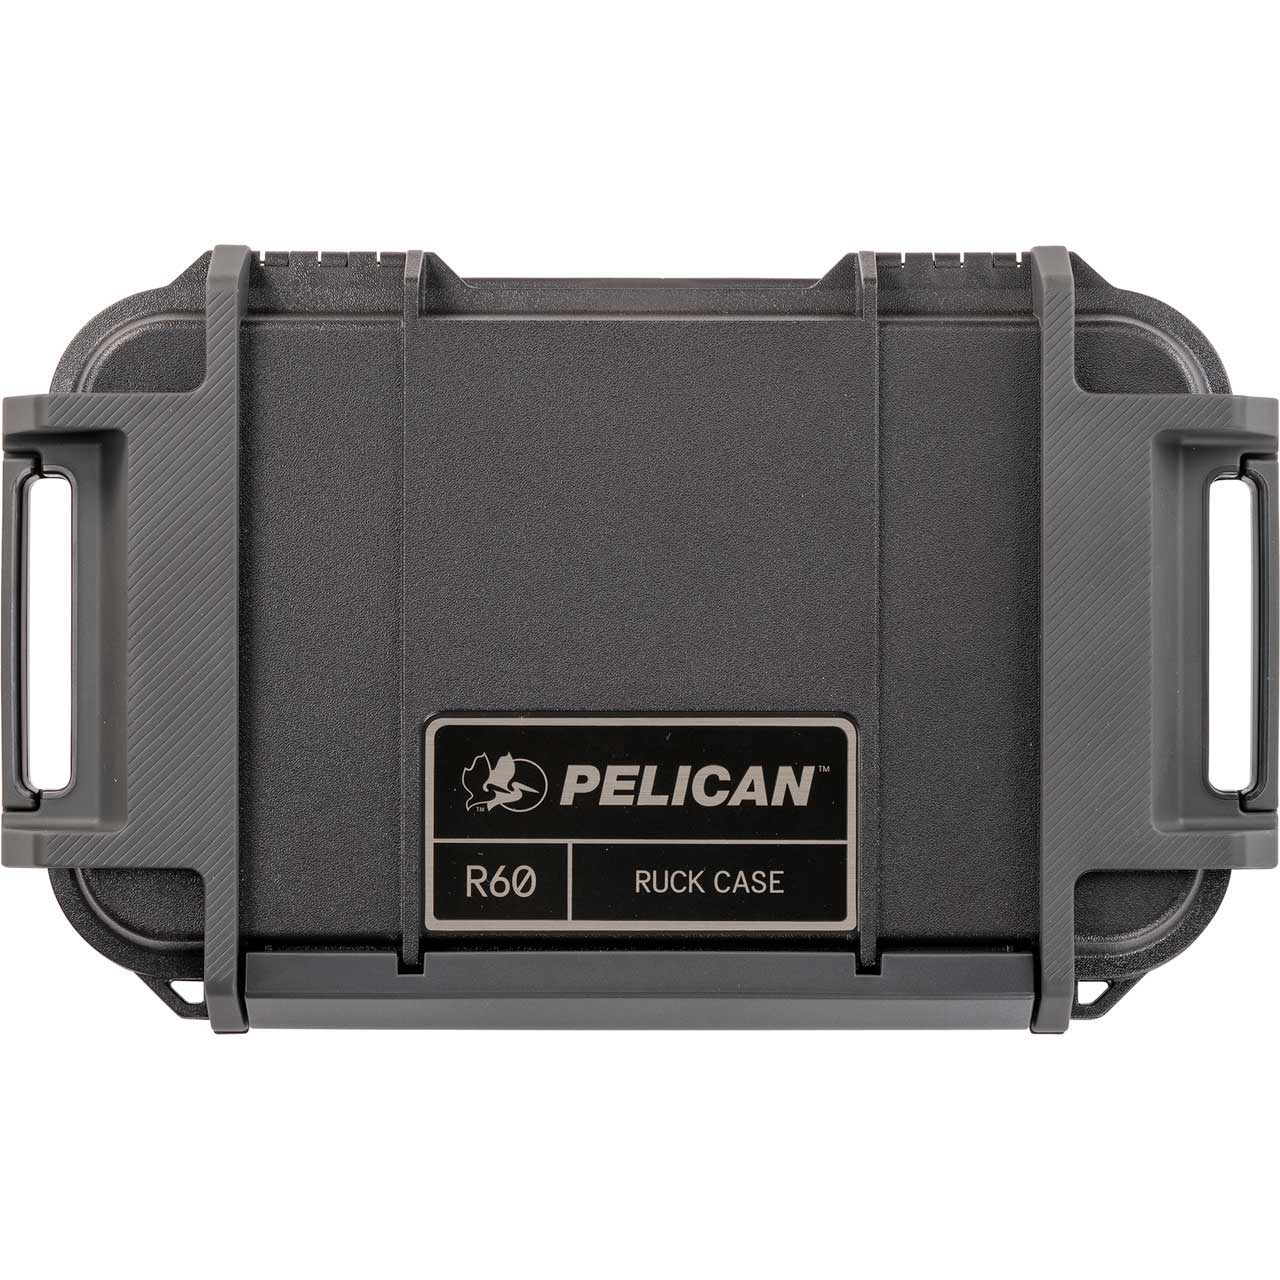 Pelican R60 Personal Utility Ruck Case - Black